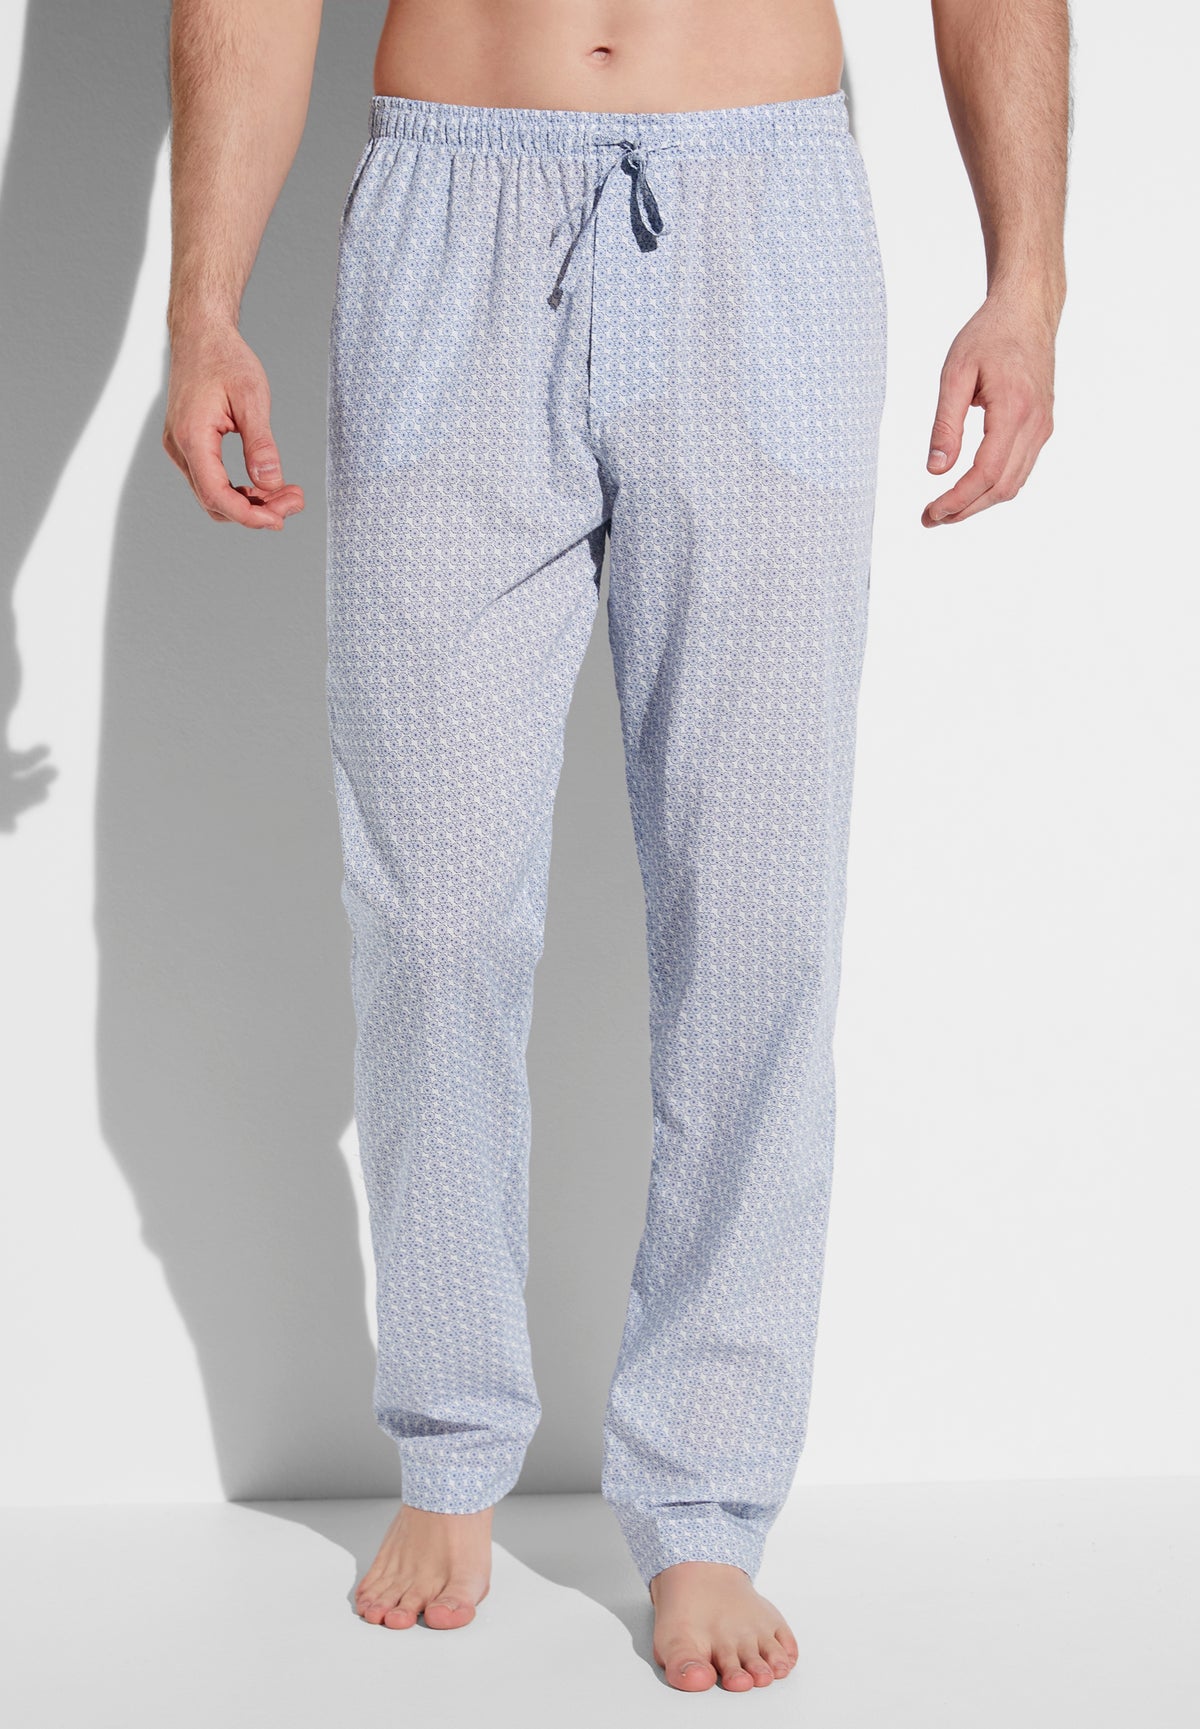 Cotton Voile Print | Pants Long - disty-geo white